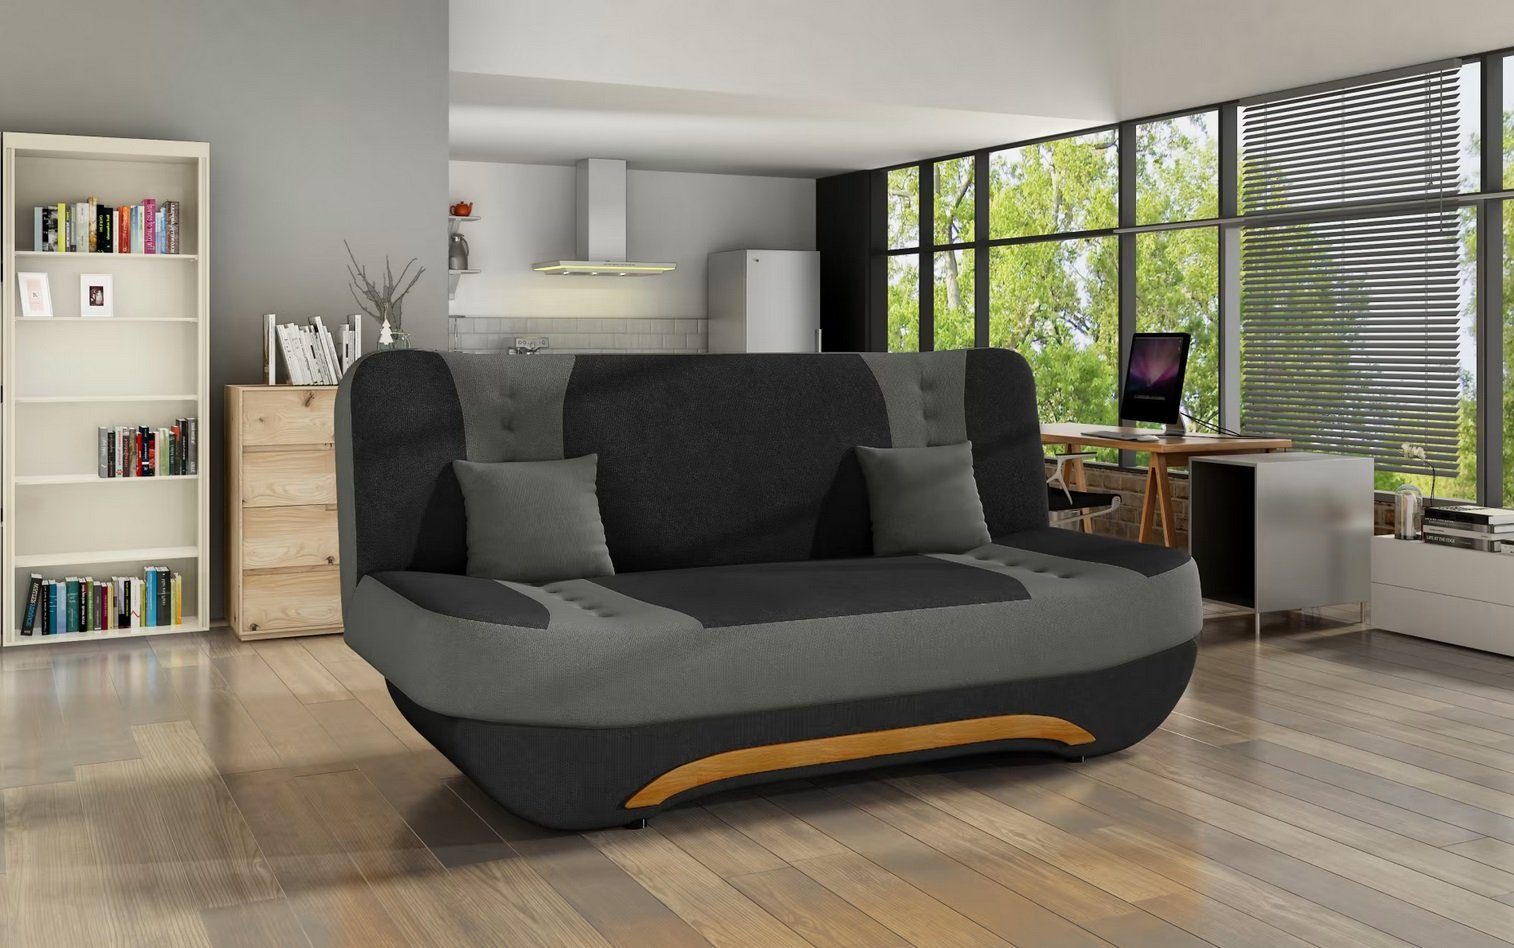 Dreifachsitz Textilsofa Couch Holz Couch Polster Sofa 3 Sitzer Textil Couchen Neu Sofort